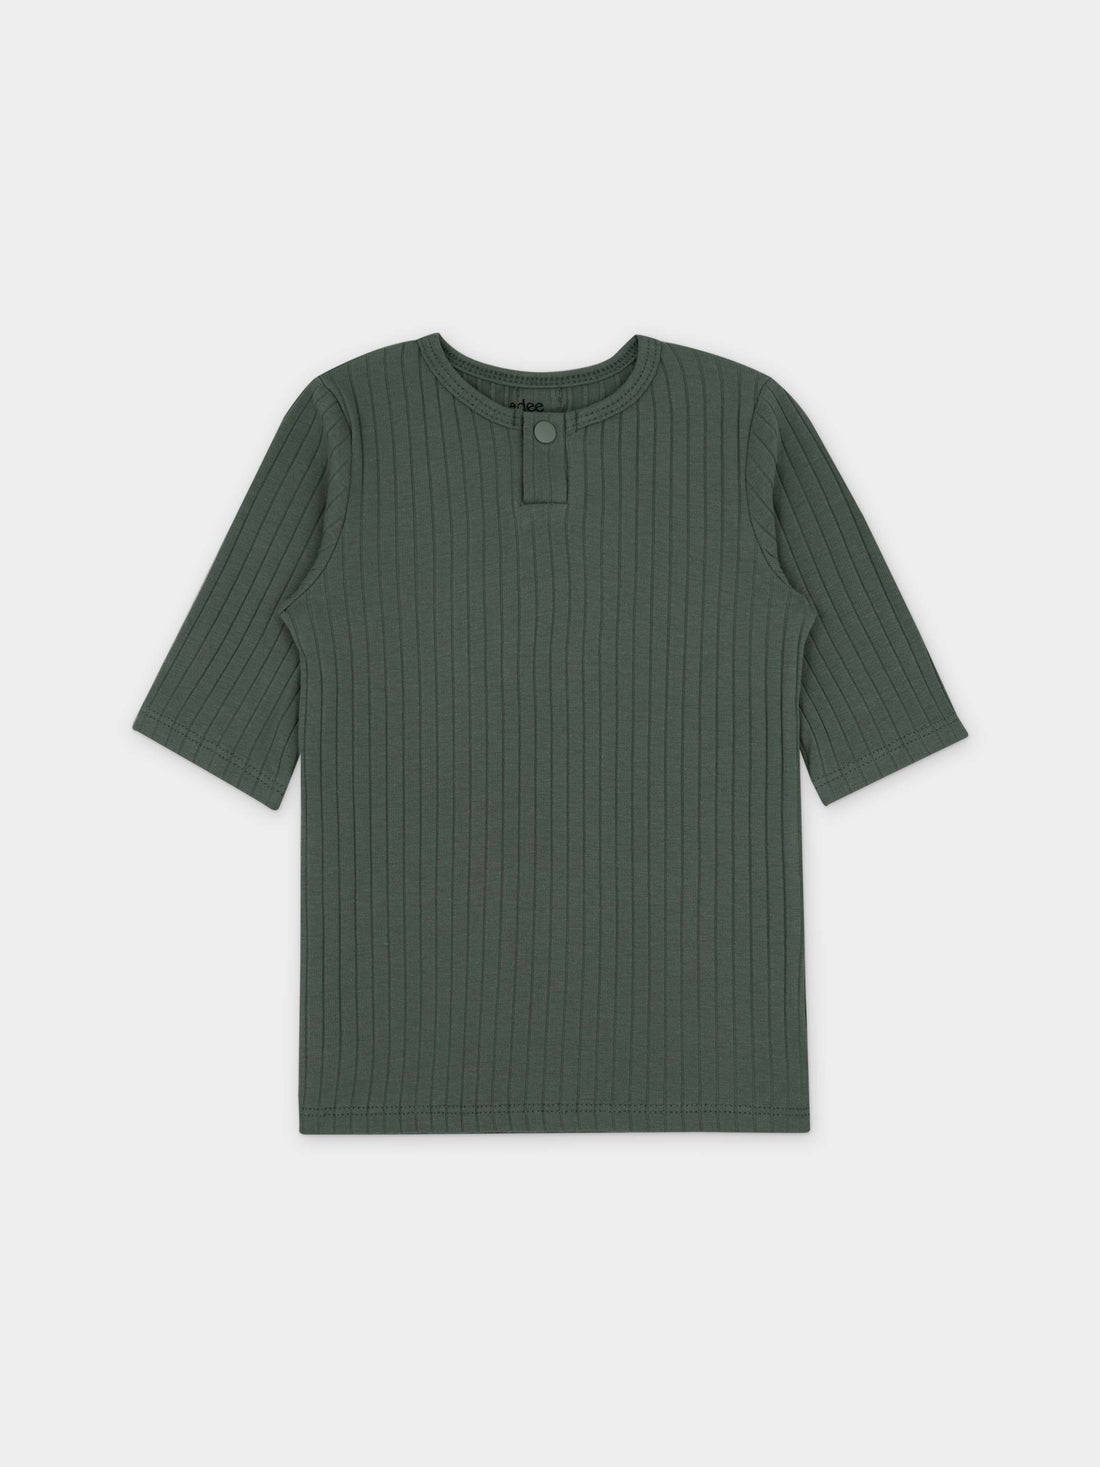 One Snap Henley Short Sleeve Shirt and Skirt-Green